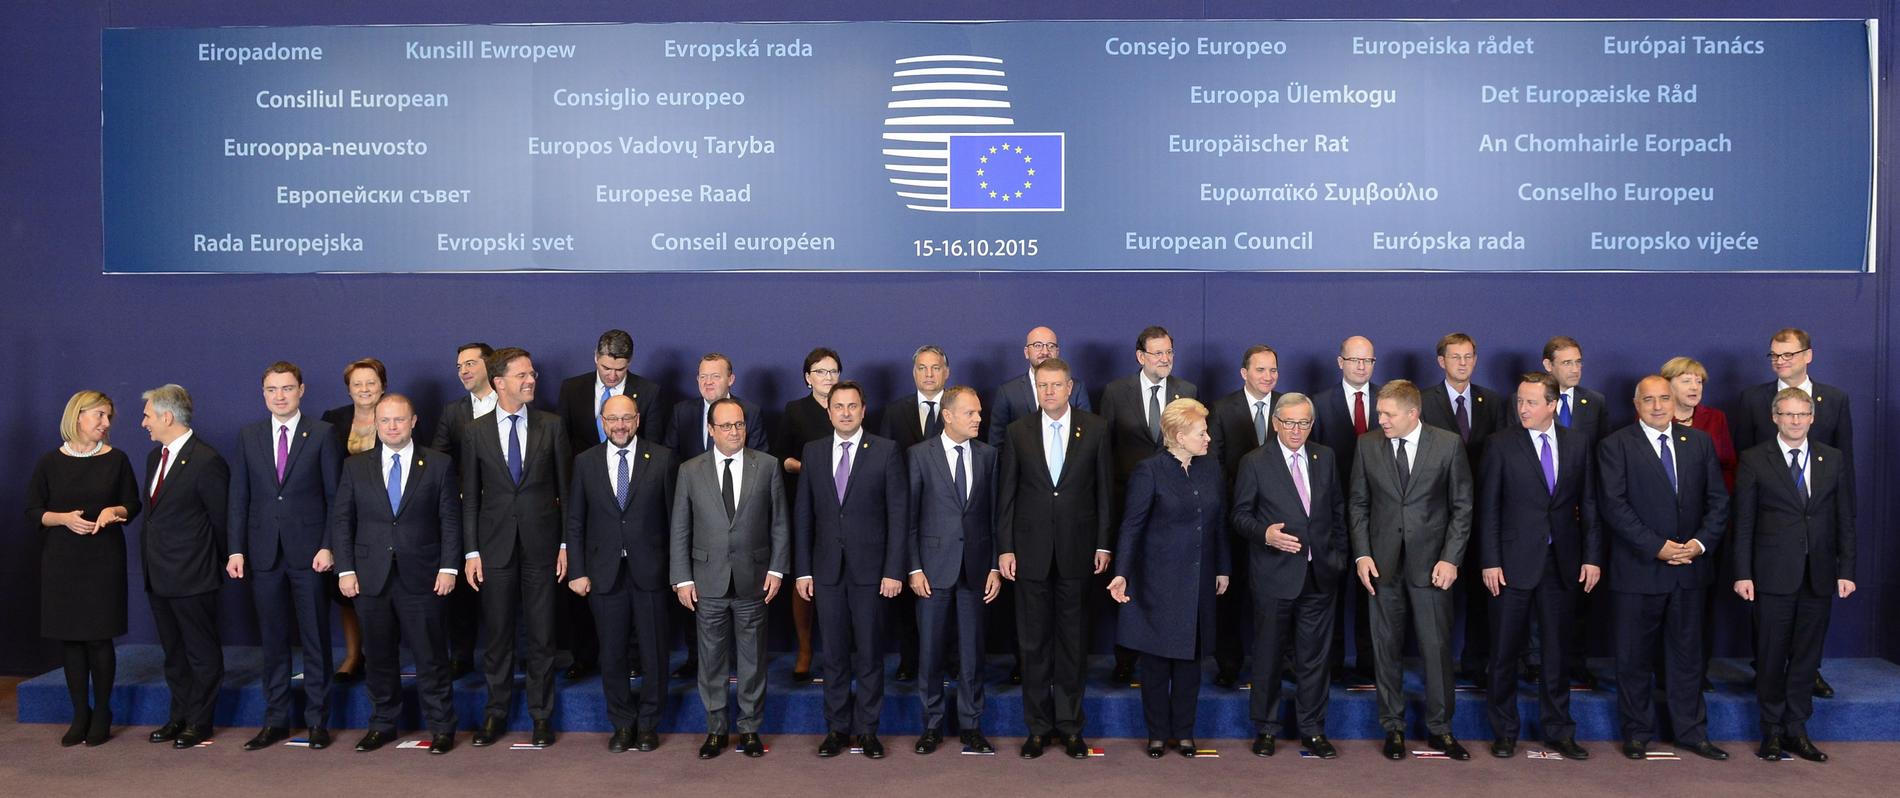 EU-ledarna samlades inför dagens EU-toppmöte.